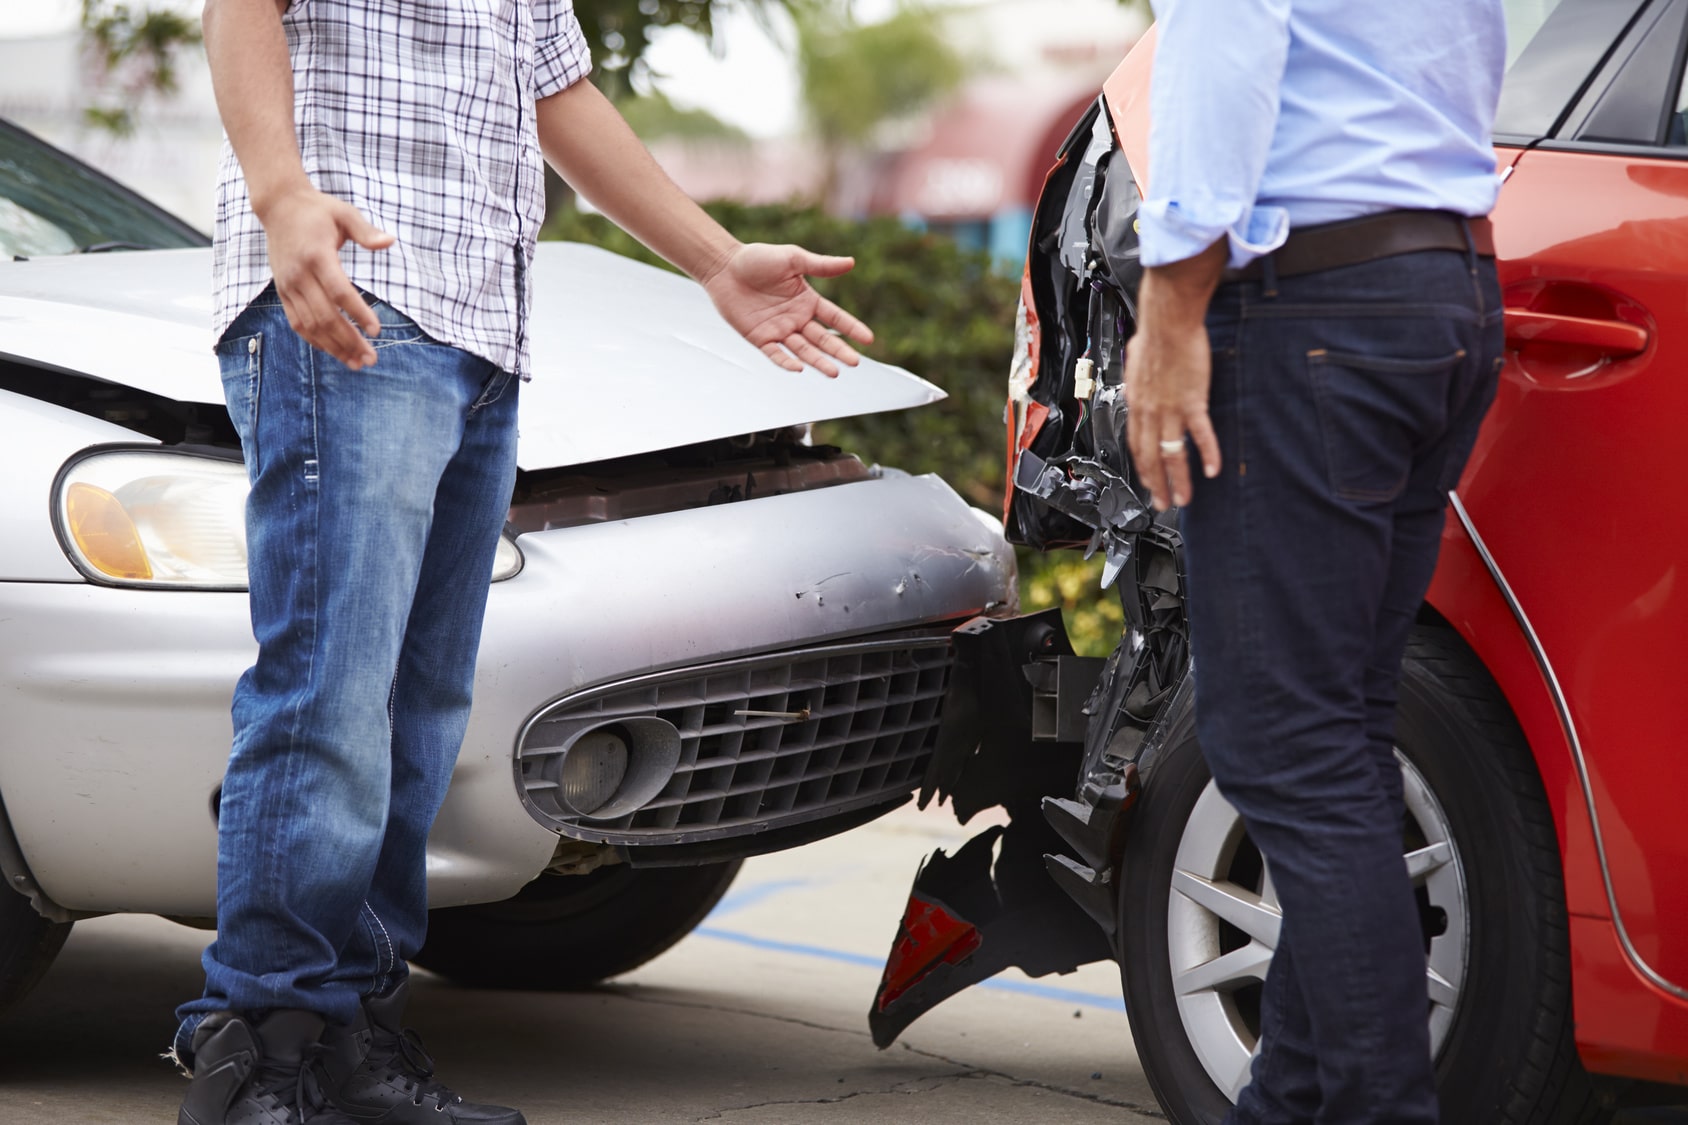 Results of Car Accident: Repair or Total Loss?